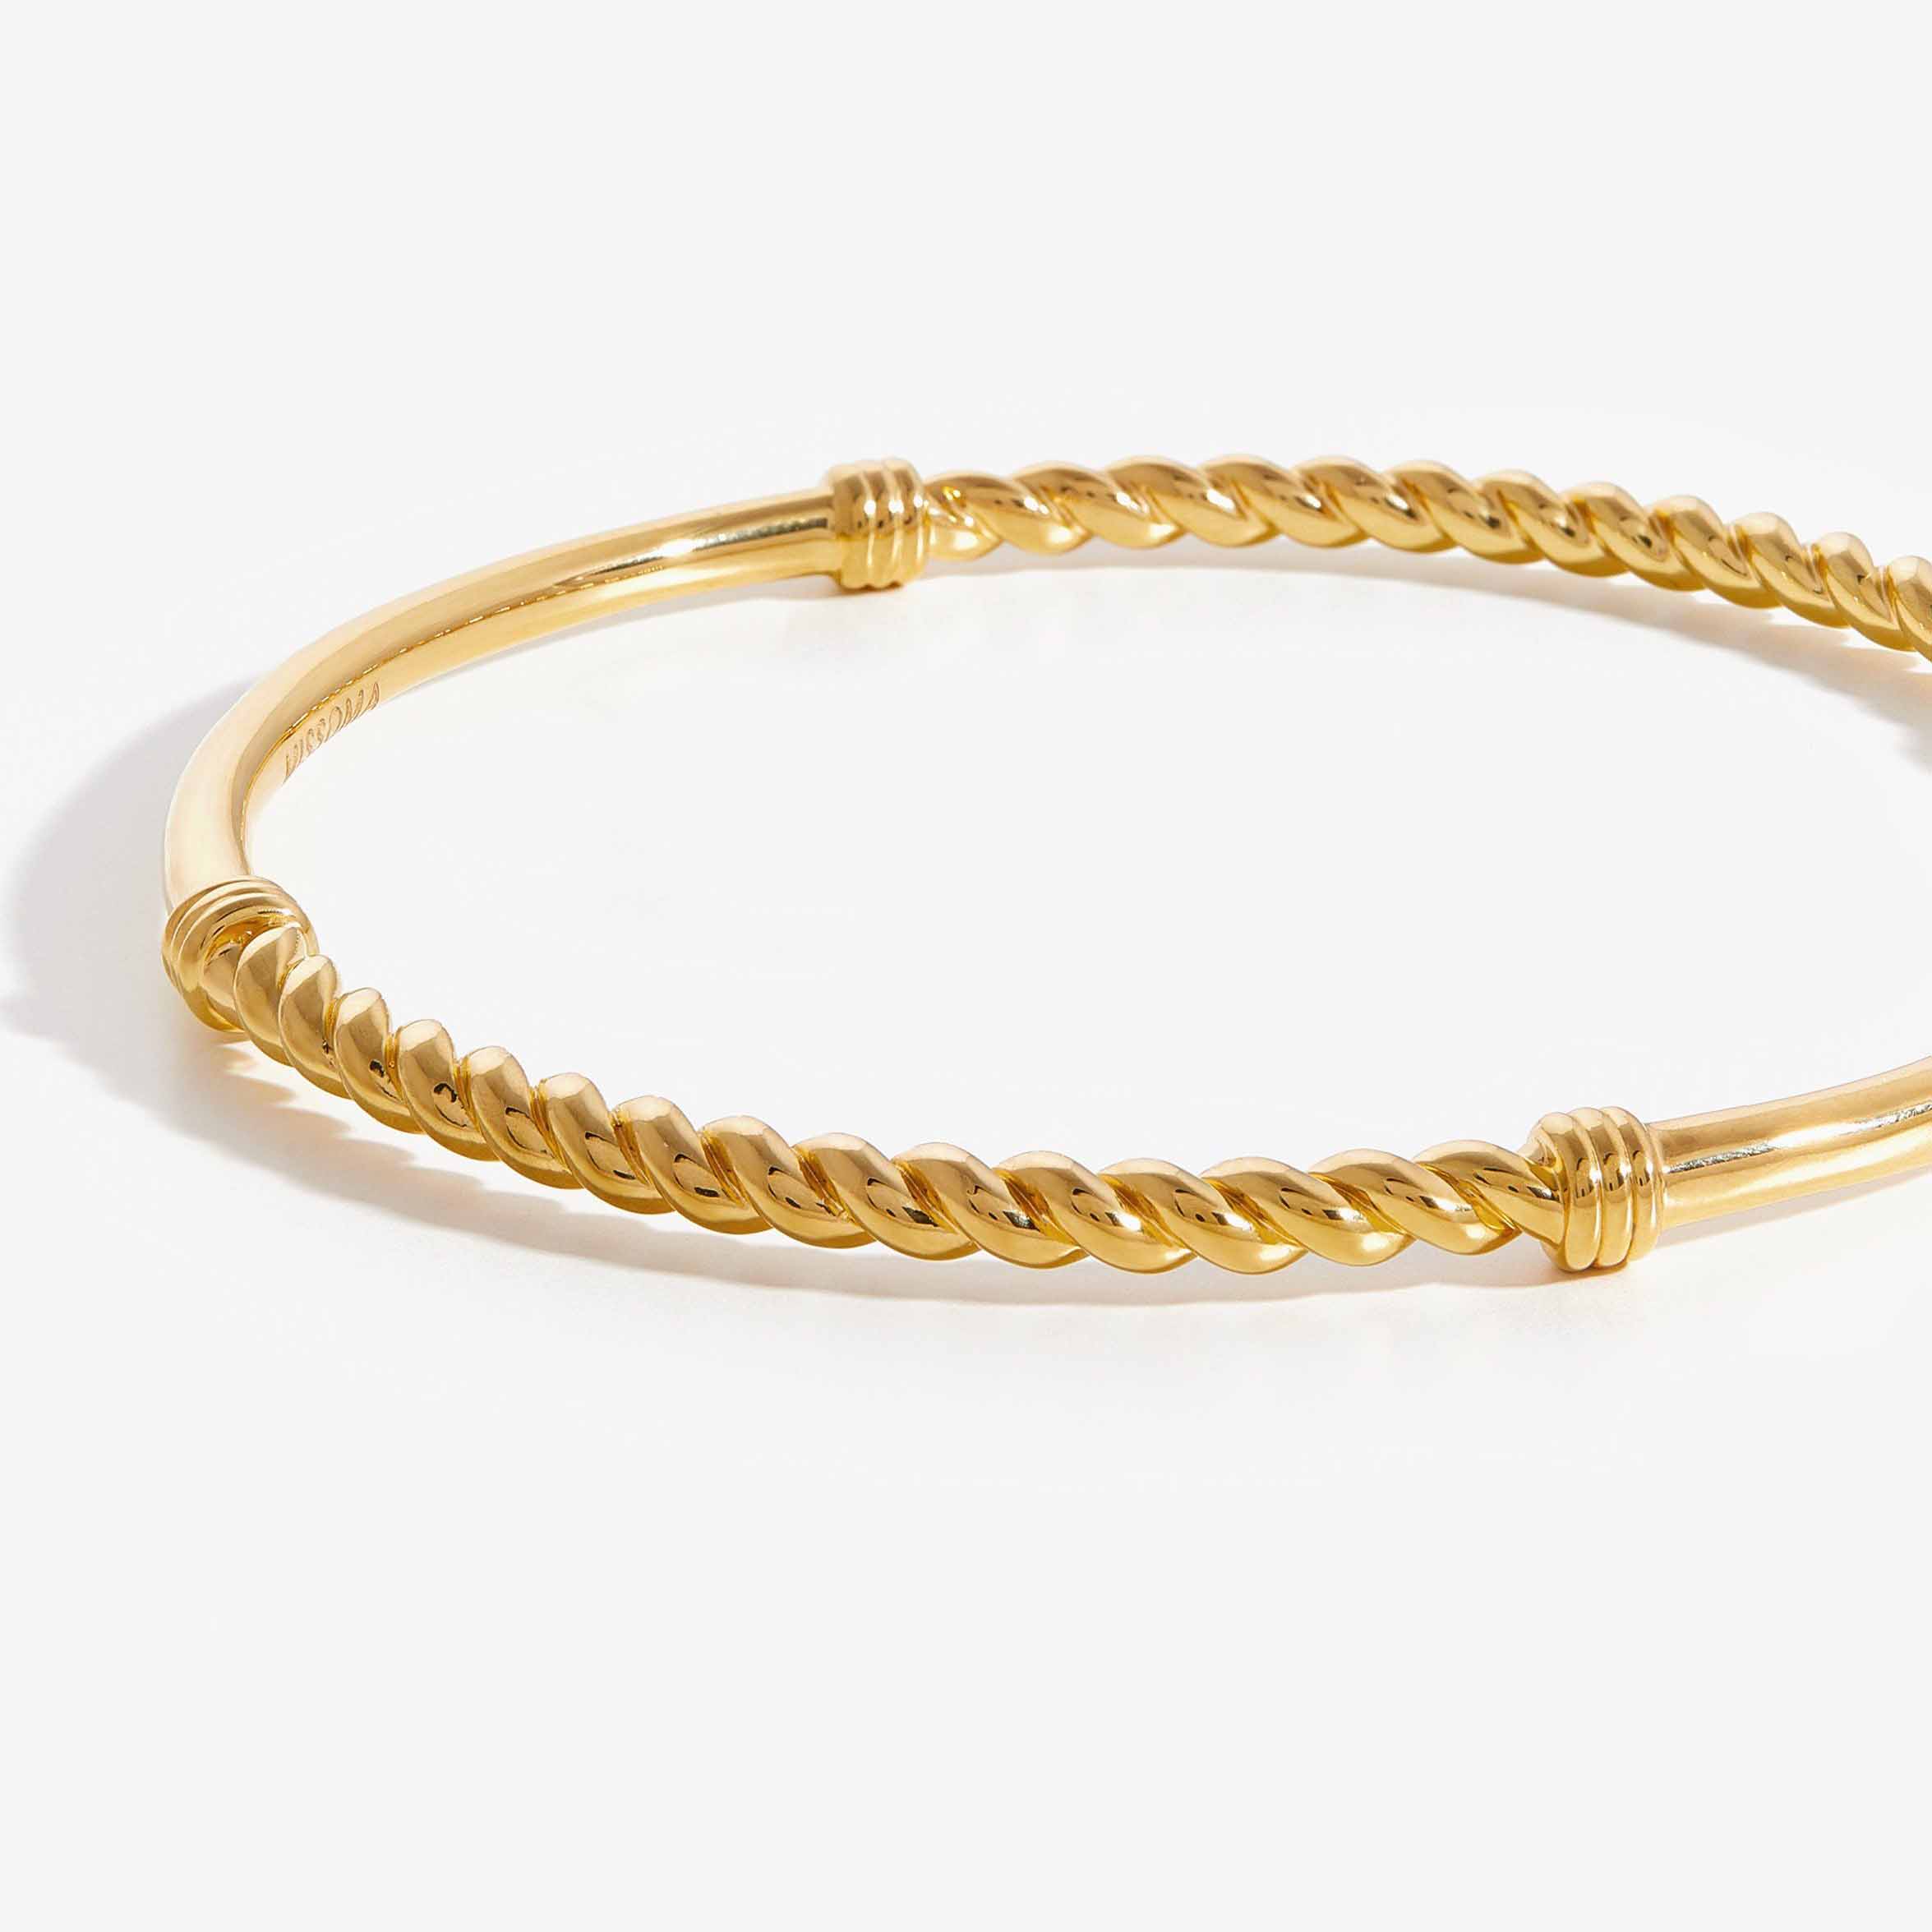 Gold filled jewelry manufacturers custom design 18k gold plated bracelet